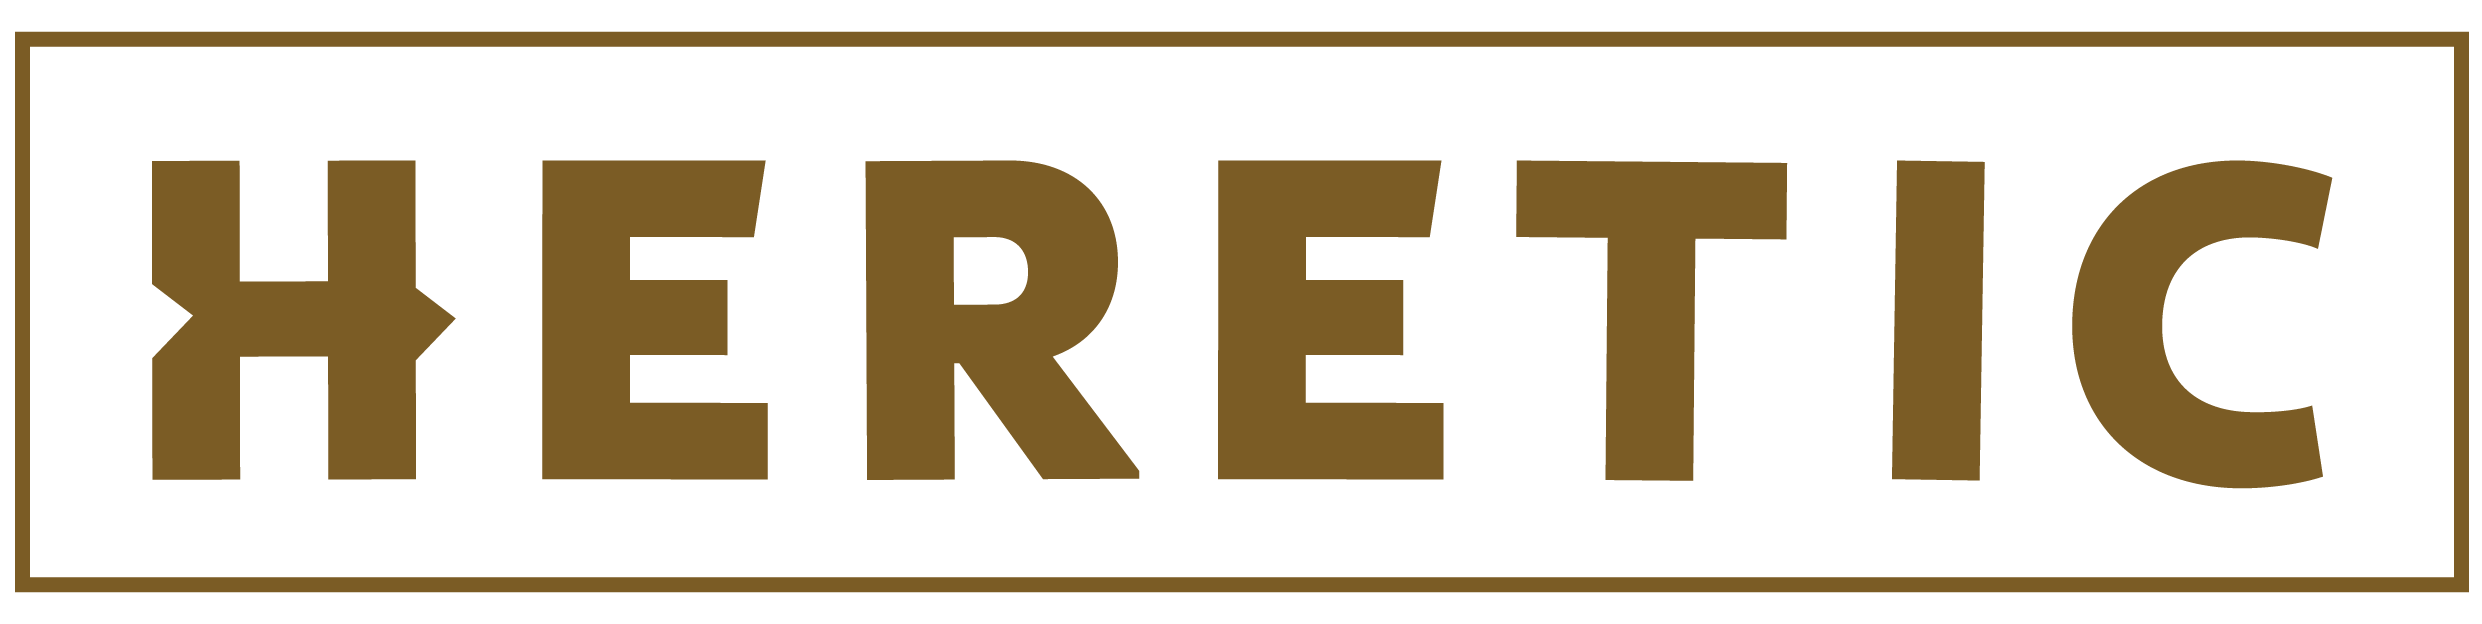 Heretic Moto logo